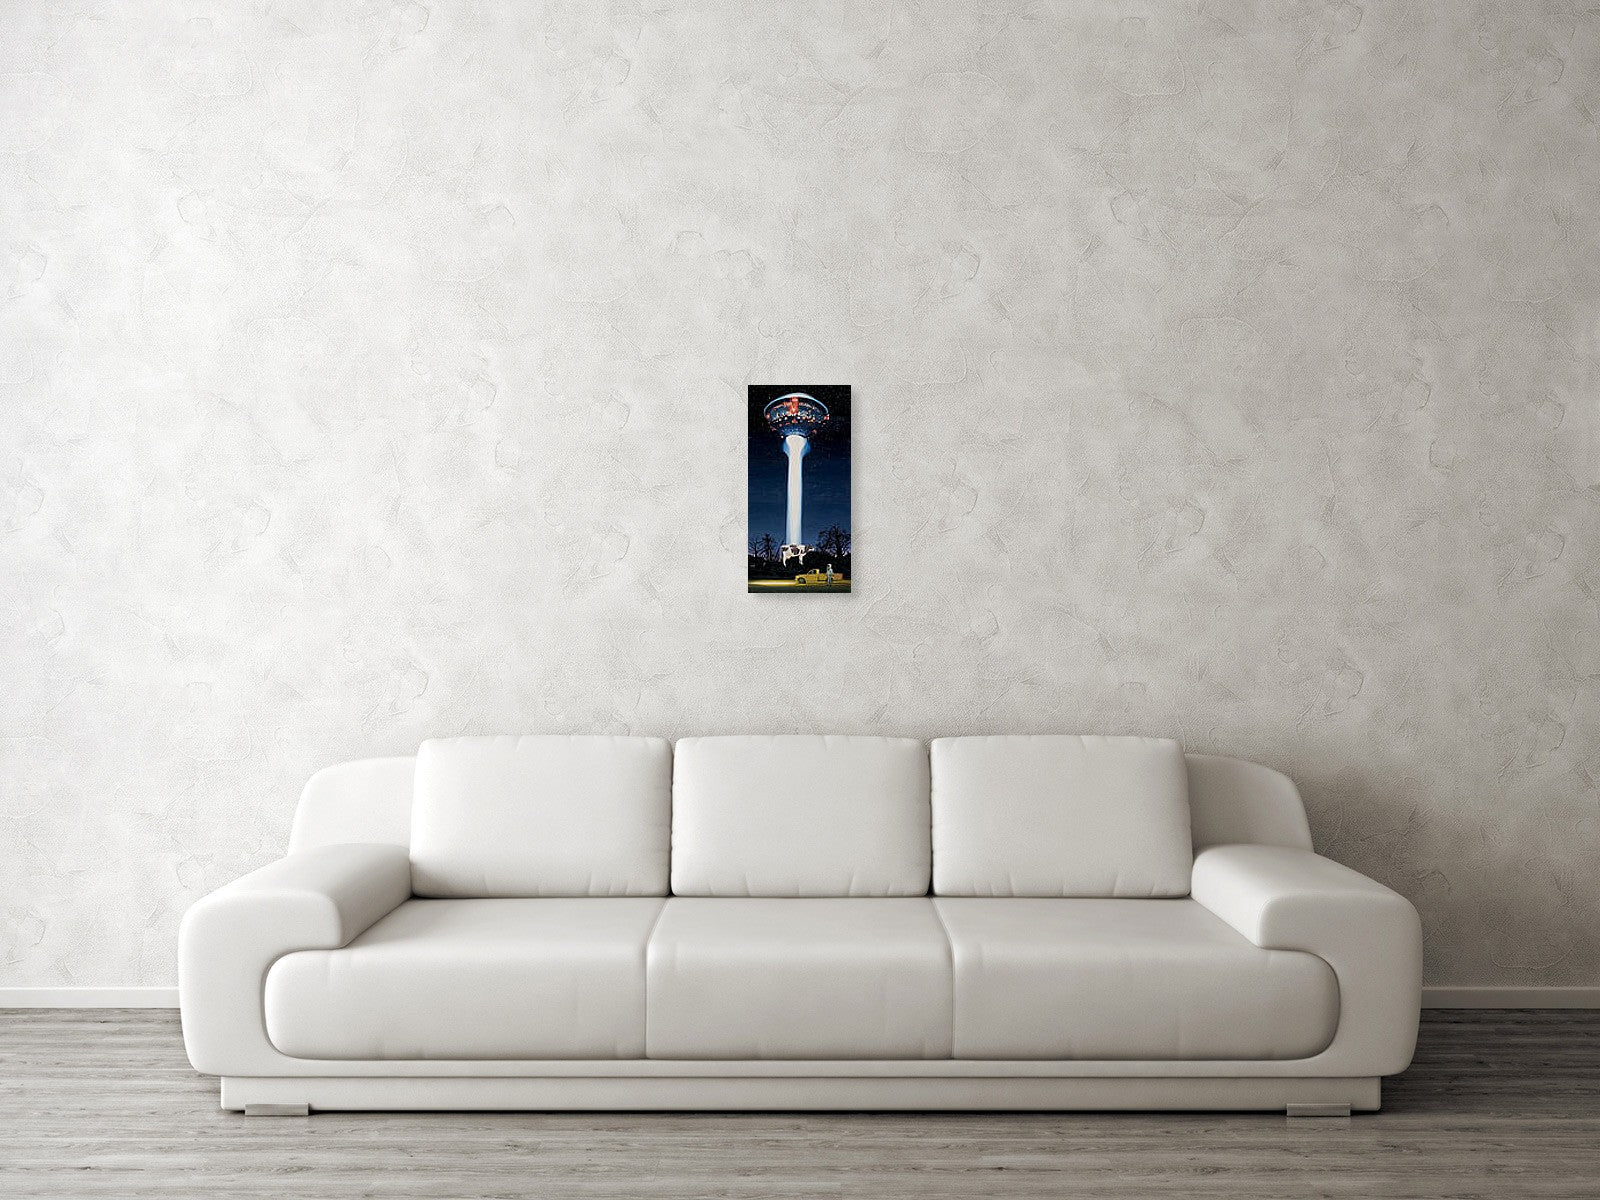 A Close Encounter Art Print Canvas And Poster, Warm Home Decor Wall Art Visual Art 1617268379954.jpg